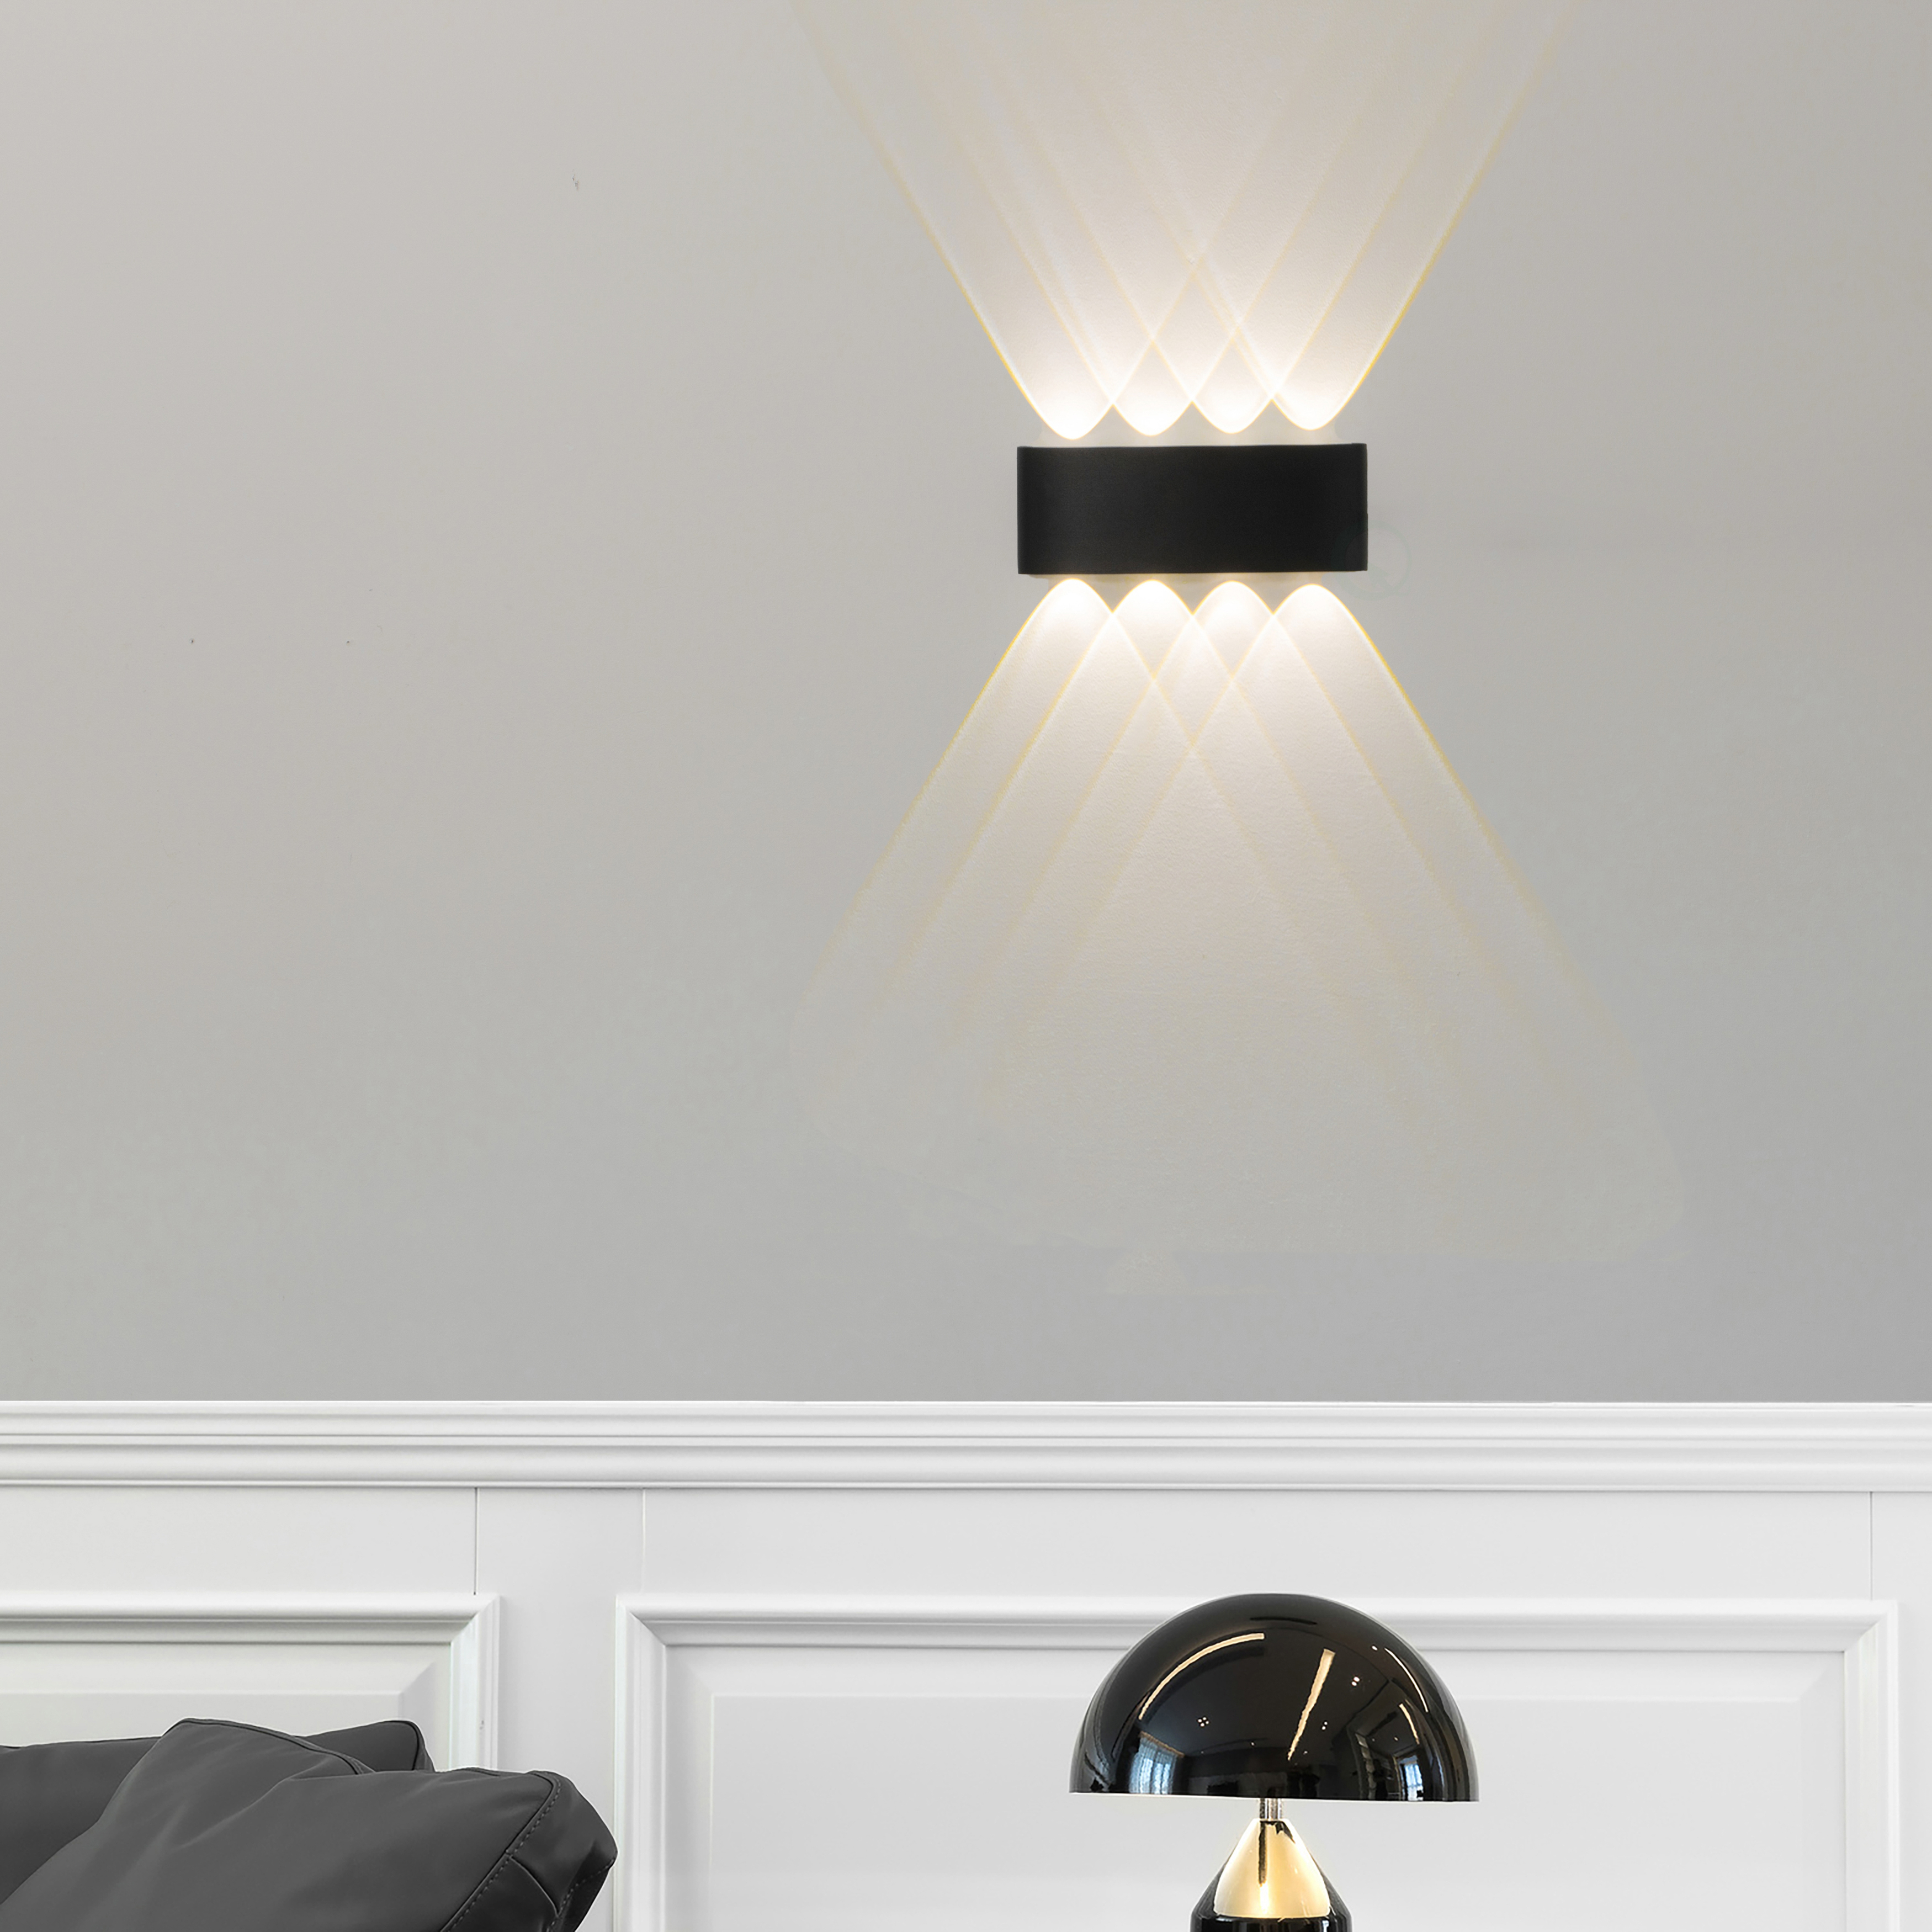 Black Contemporary Decorative Waterproof Aluminum Wall Lamp For Indoors And Outdoors, 8 Watt Cool White 4000K - Black 6Watt